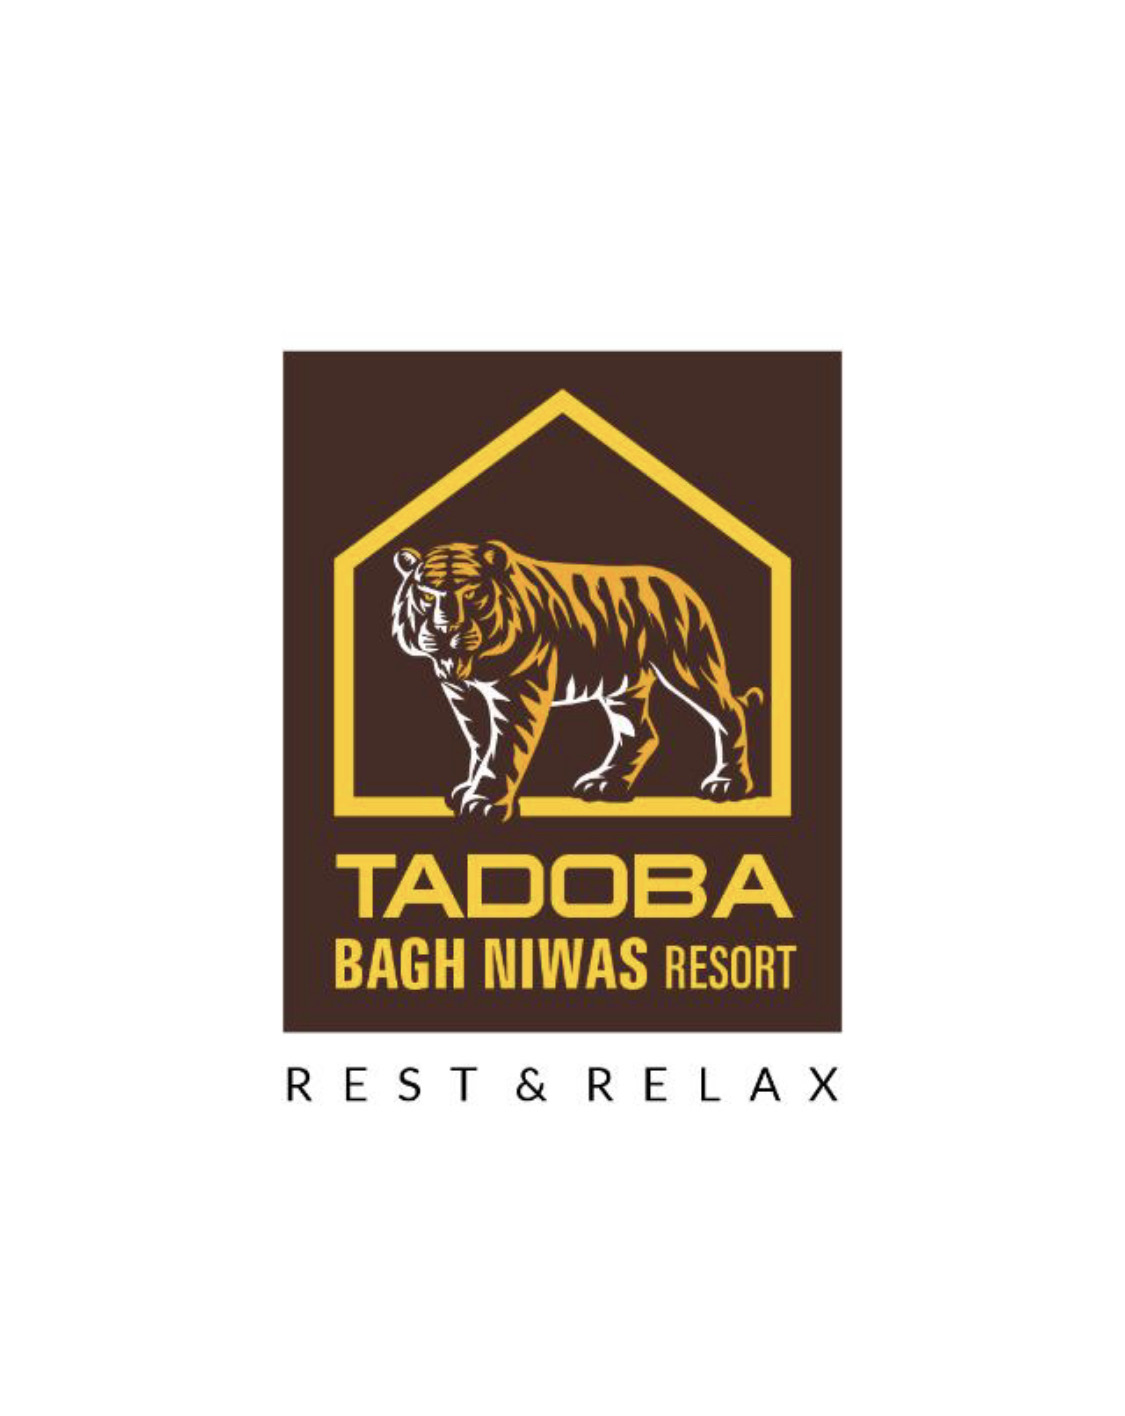 Tadoba Bag Niwas Resorts